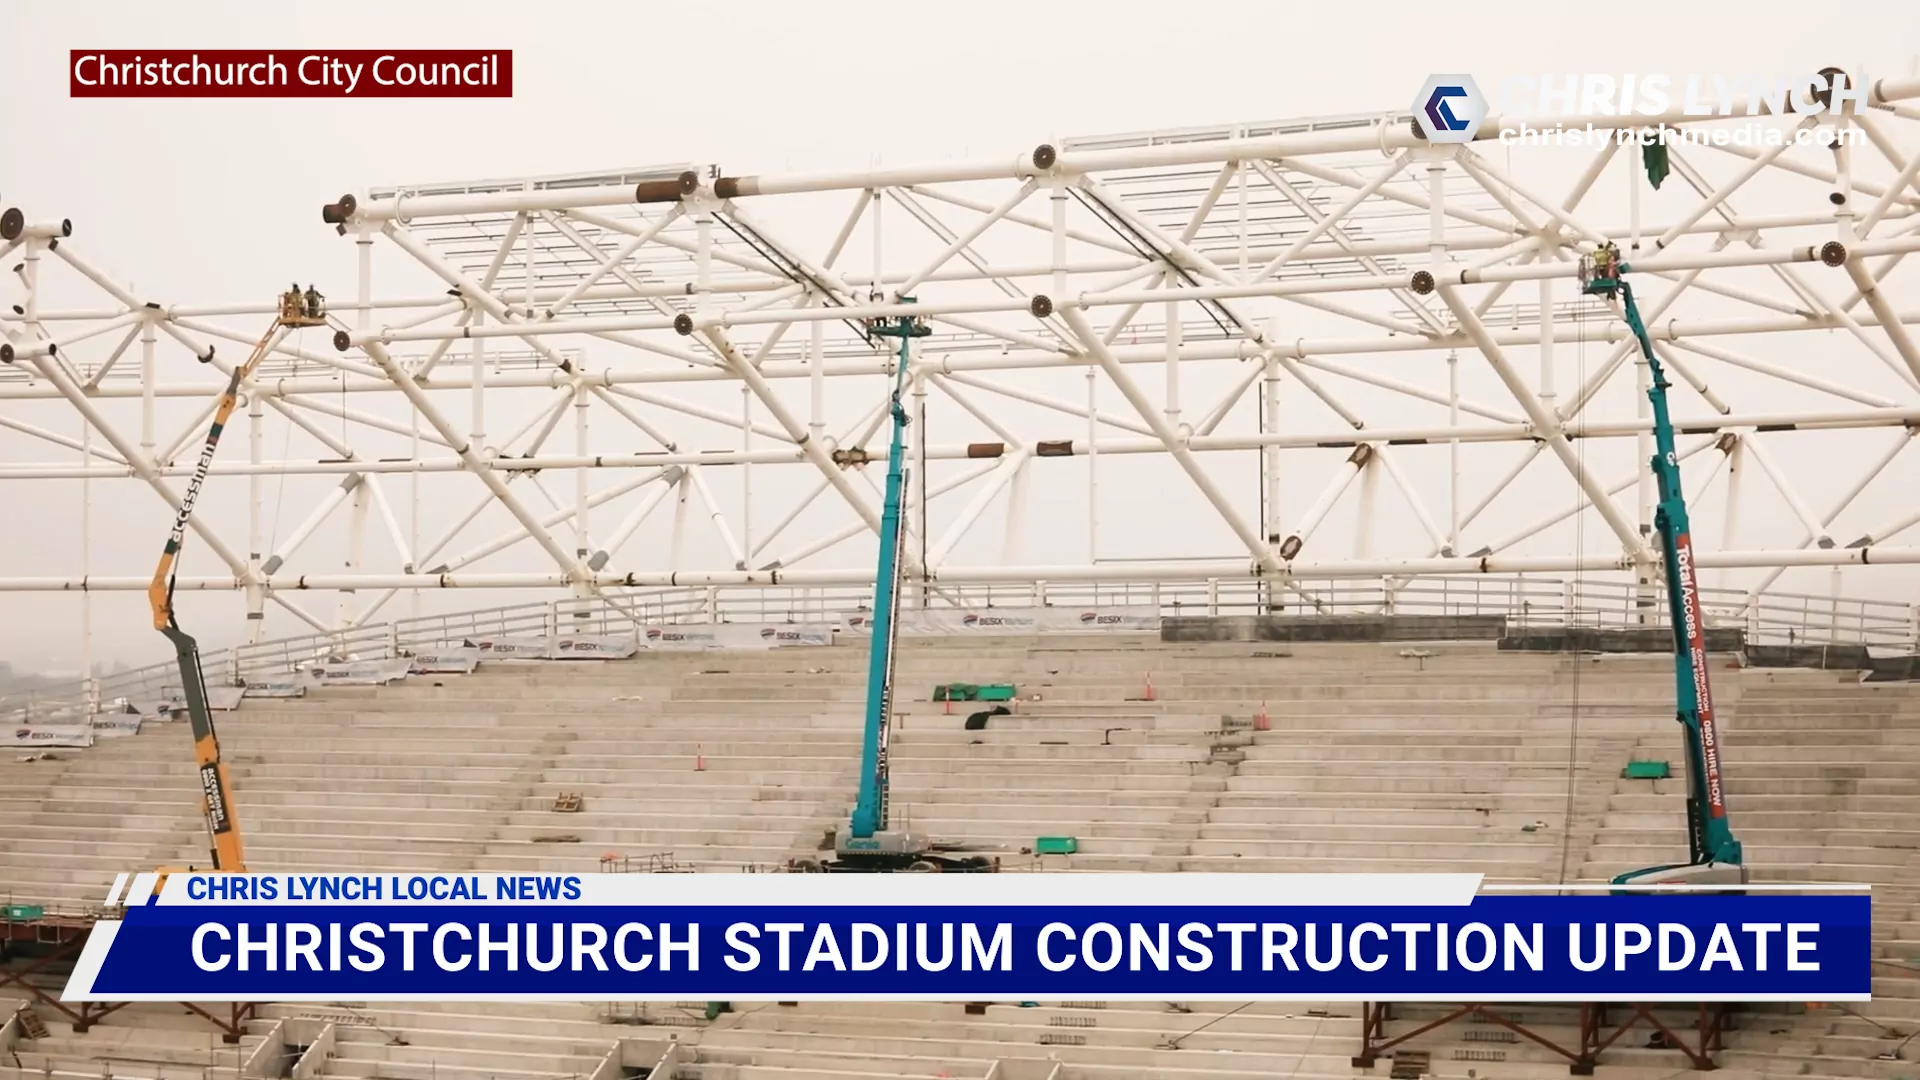 Watch latest construction developments at Christchurch stadium